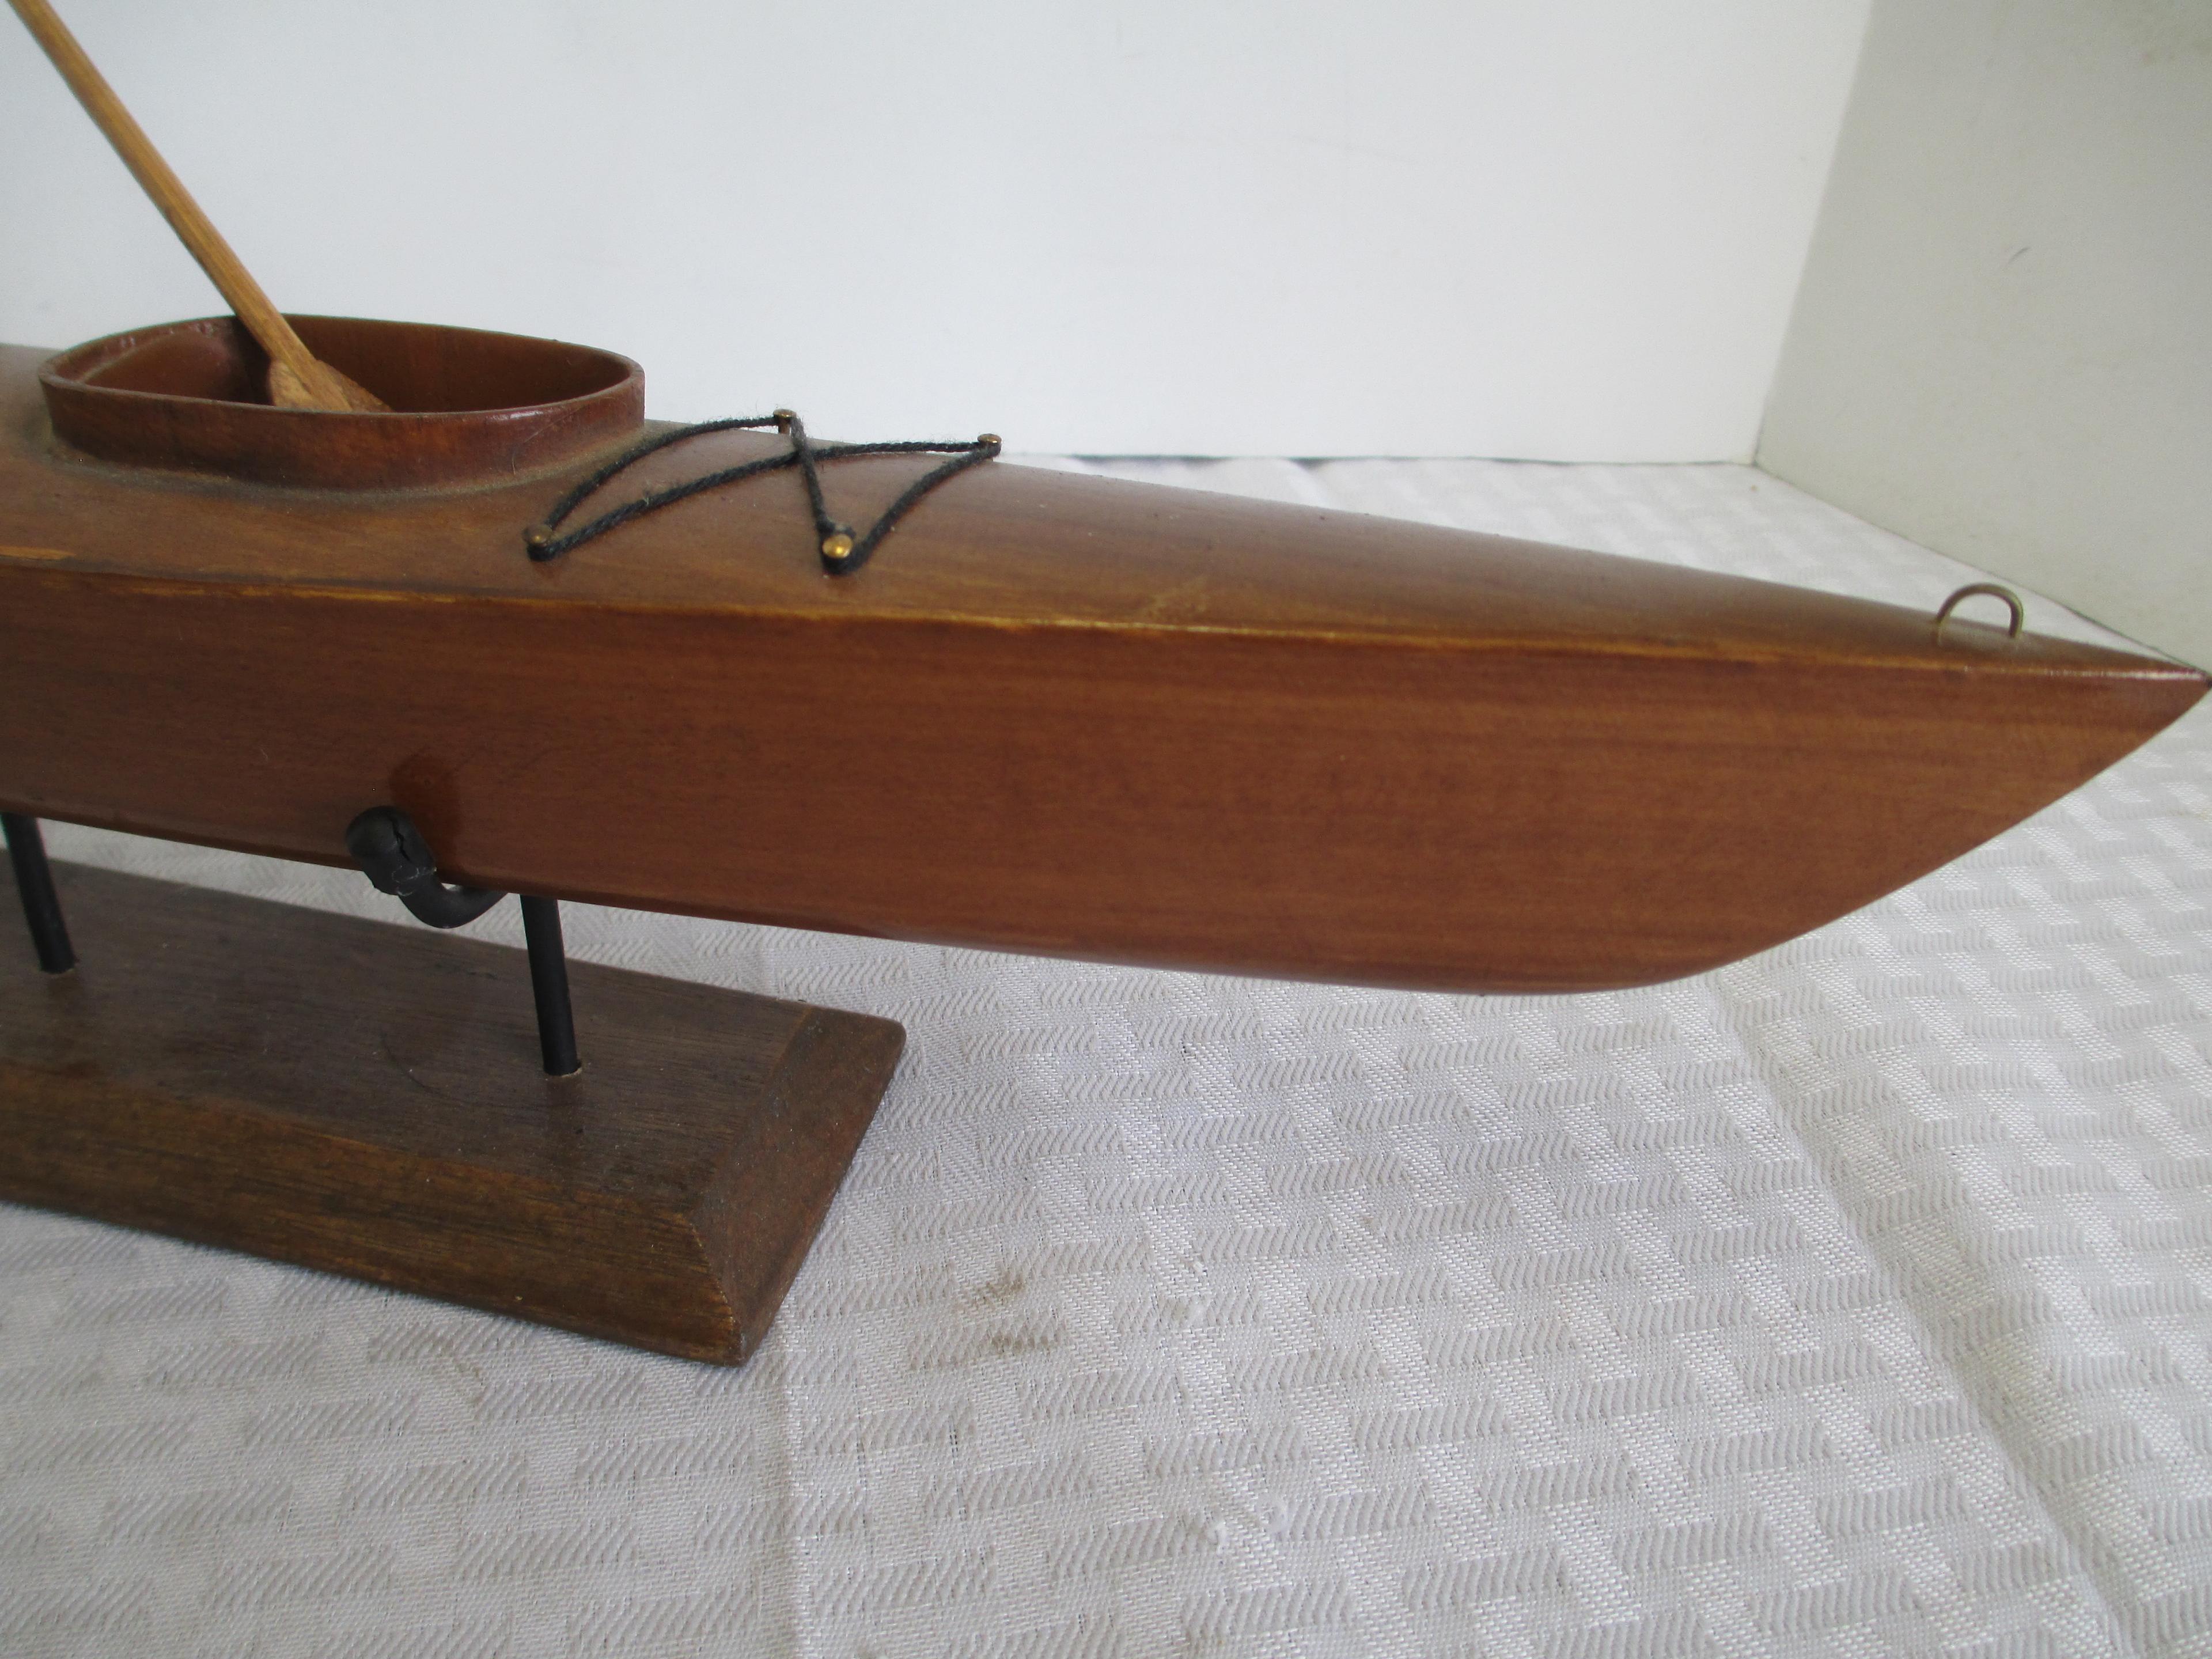 16 inch Handmade Wooden Two-Man Kayak